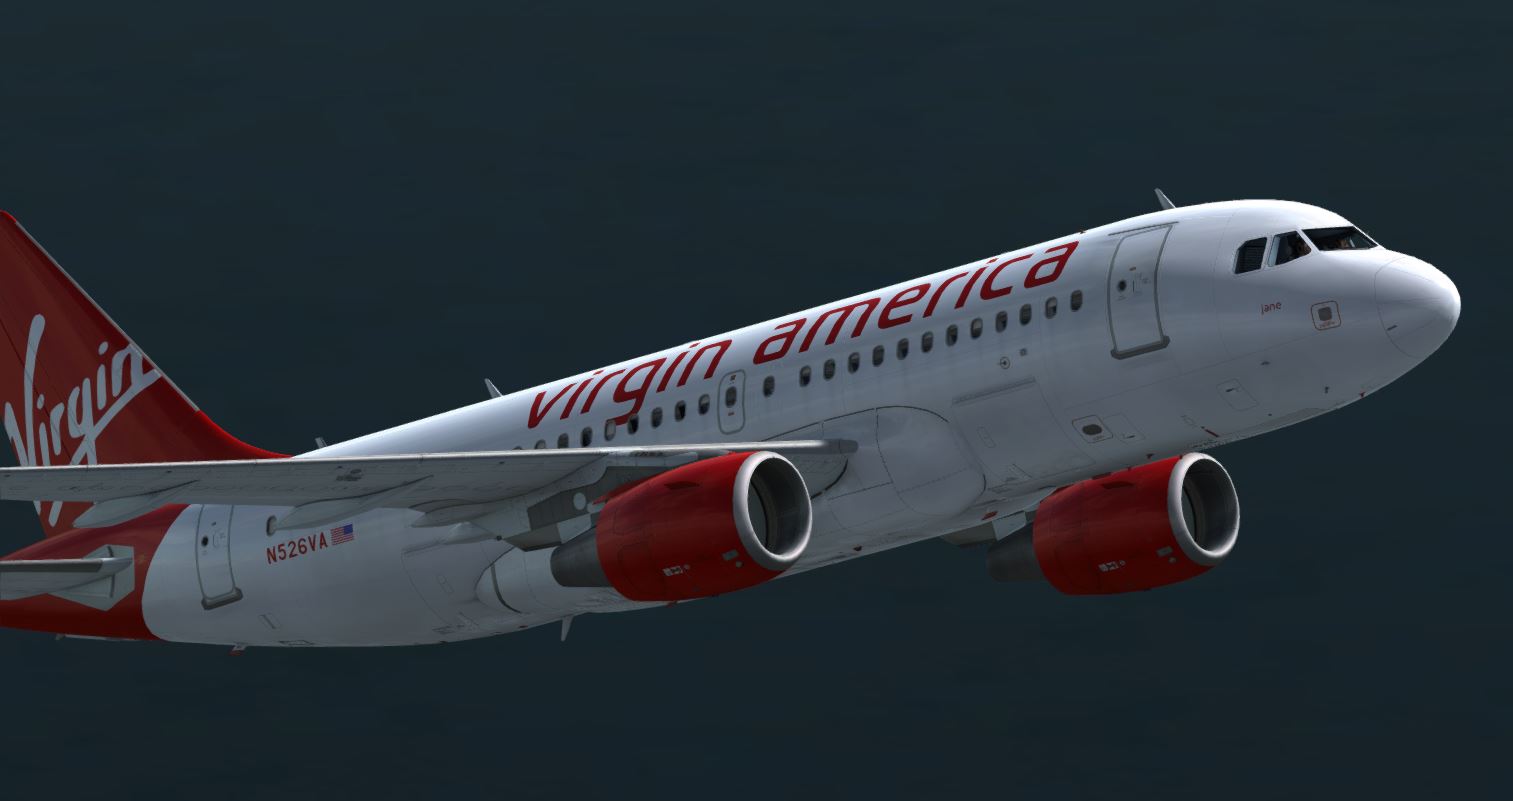 More information about "Virgin America N526VA"